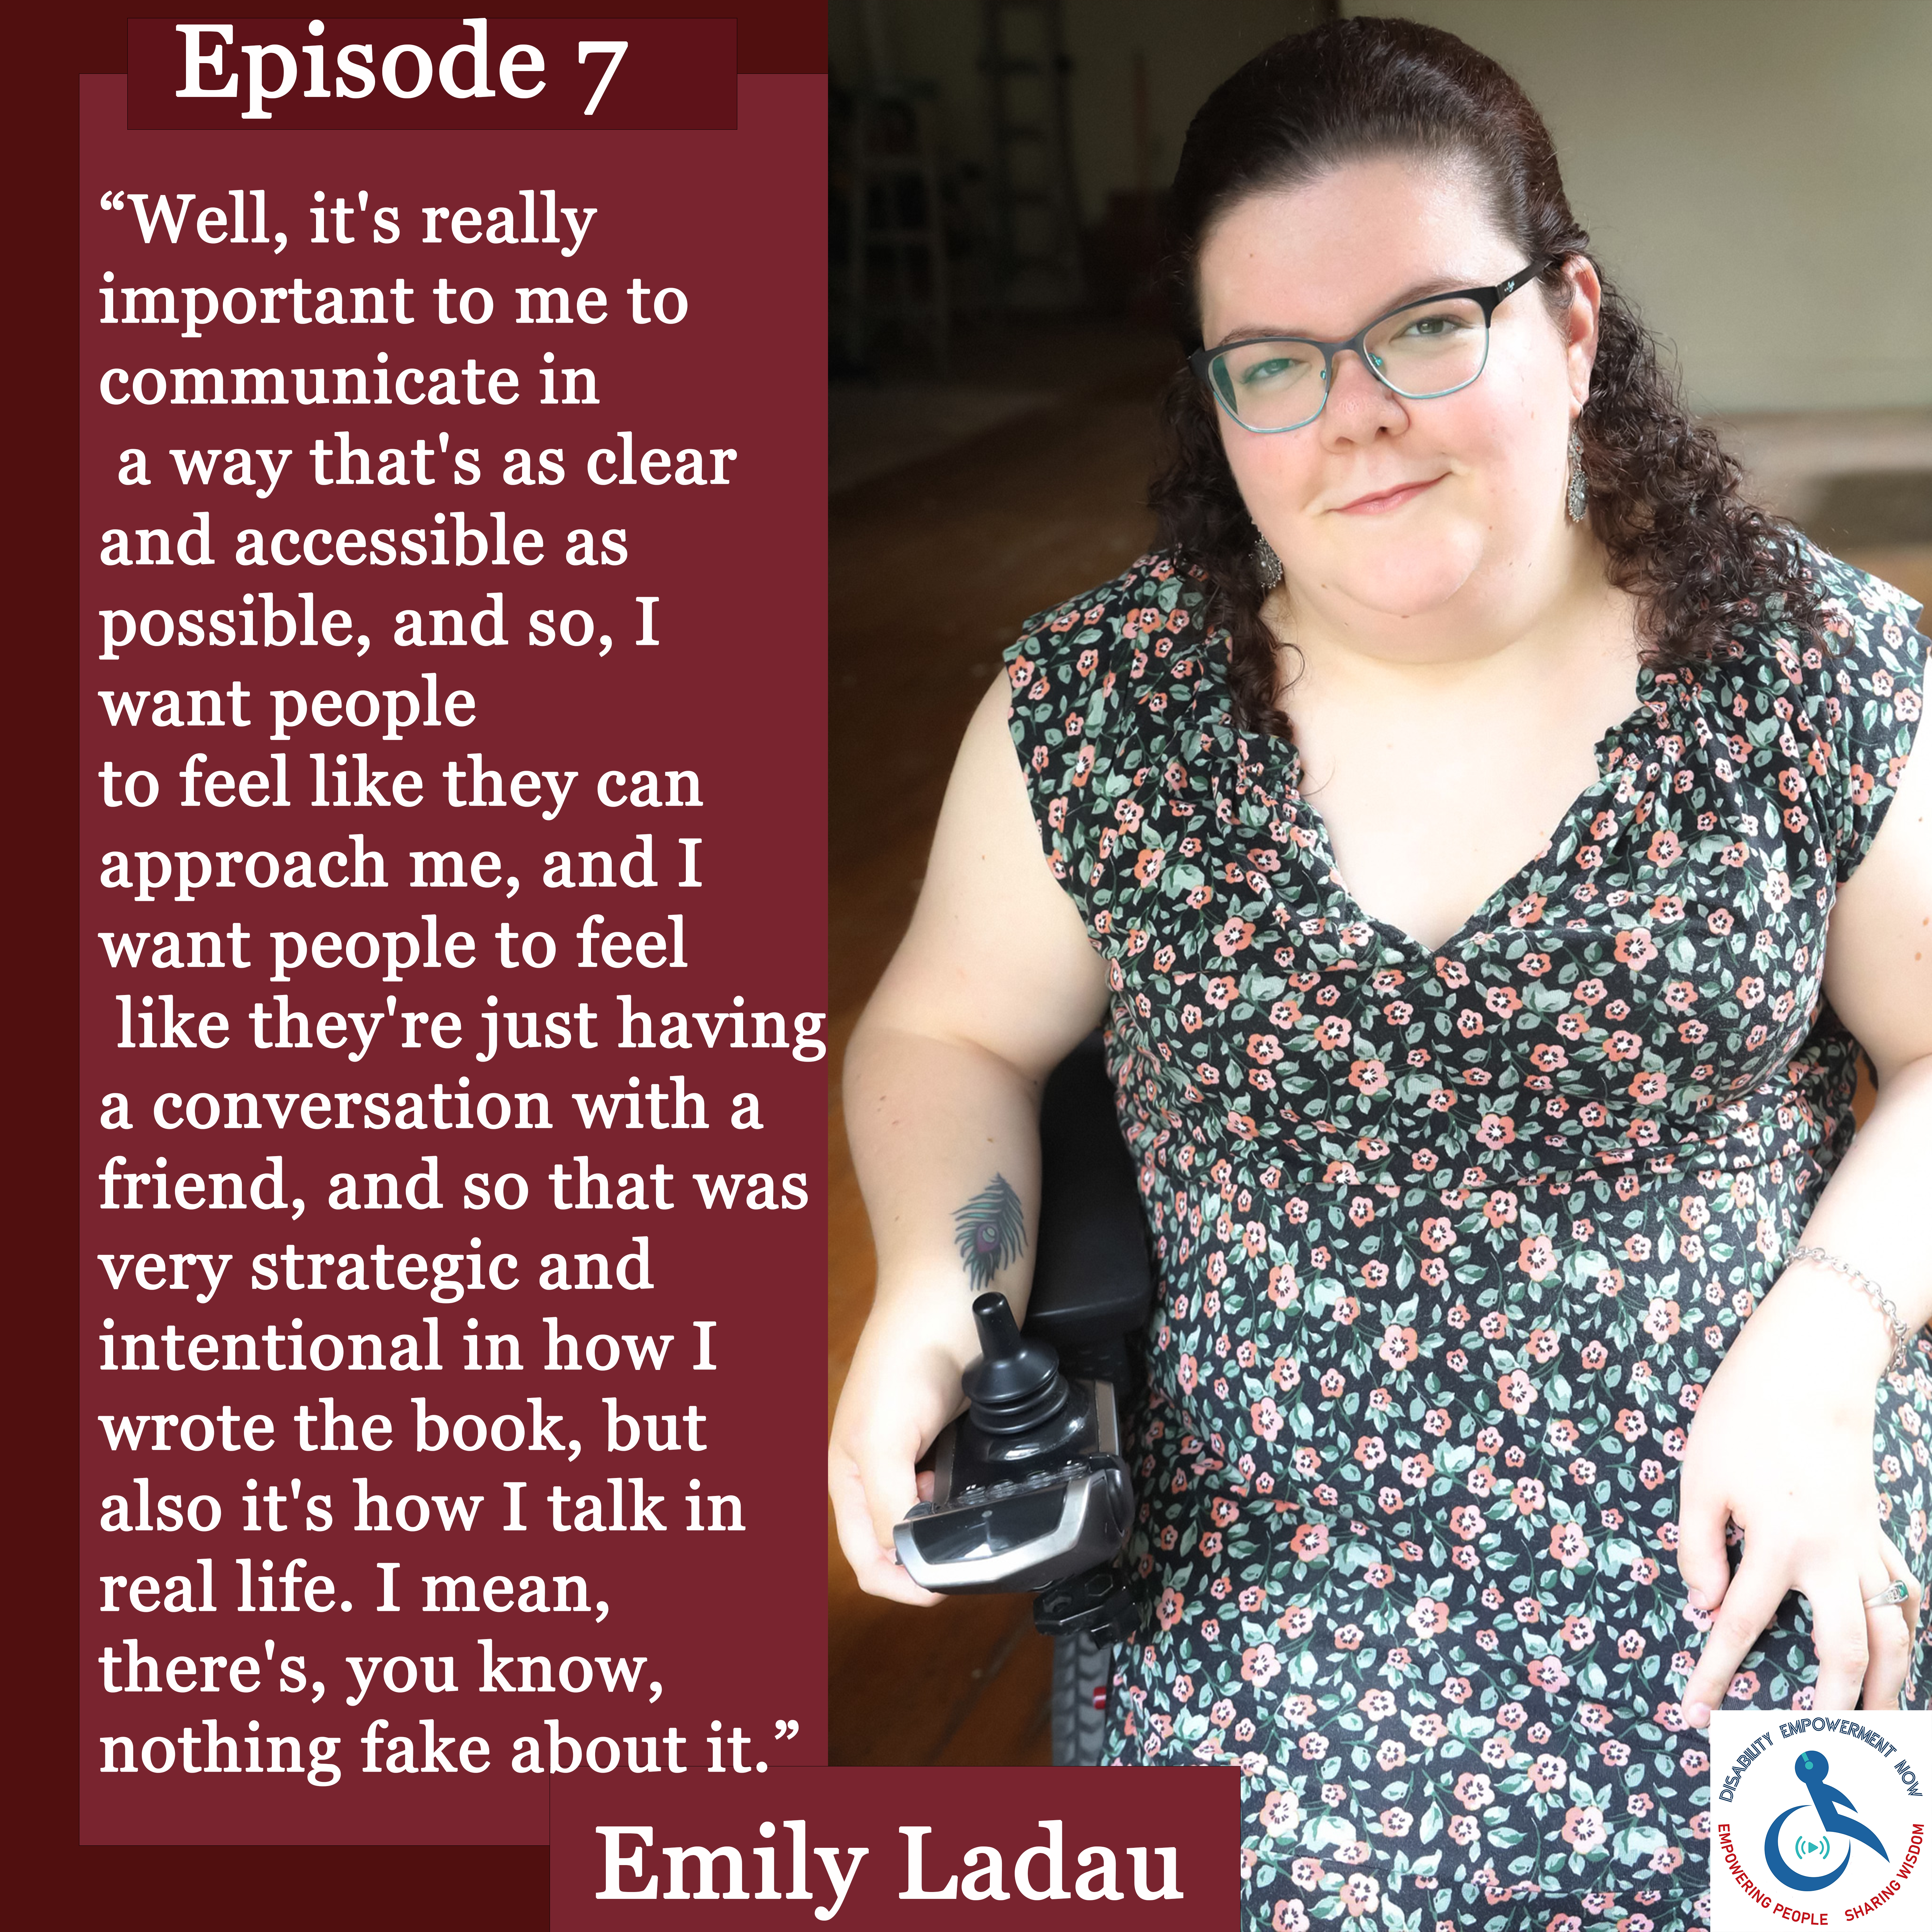 S2 Episode 7 with Emily Ladau